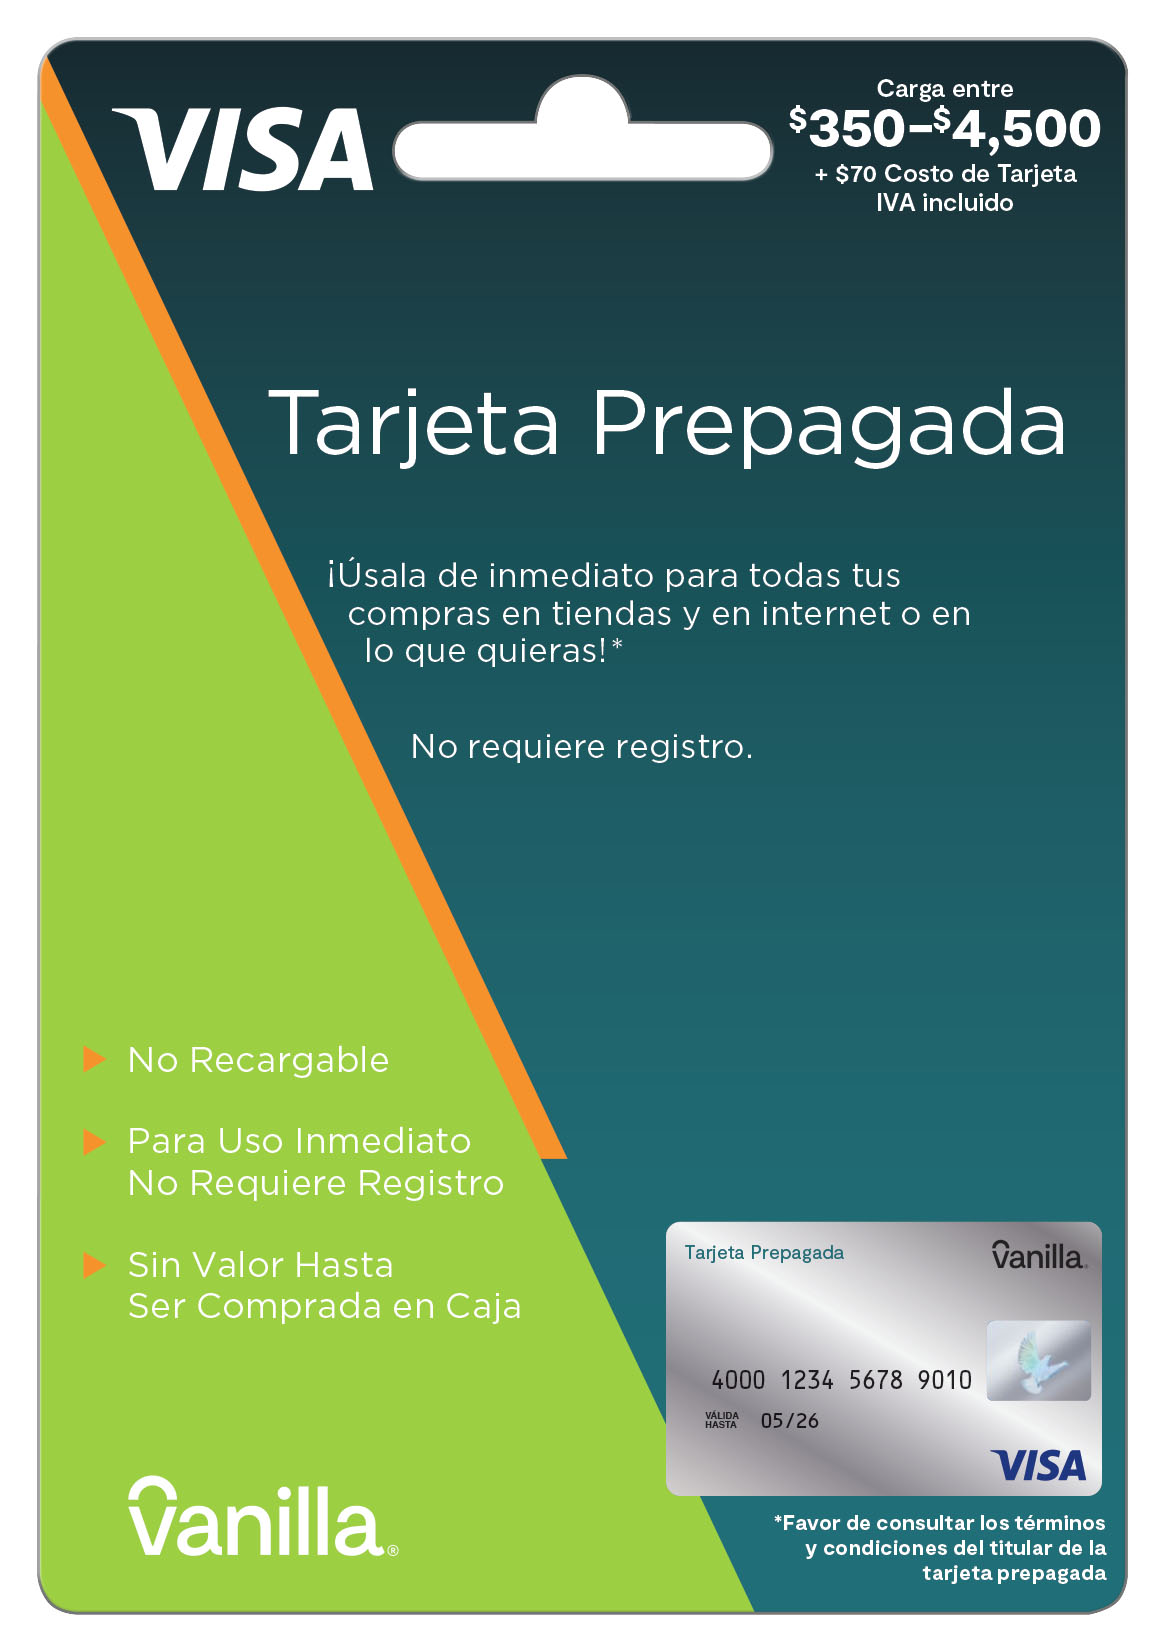 Vanilla Tarjeta Prepagada ? the perfect prepaid card for everyday personal spending